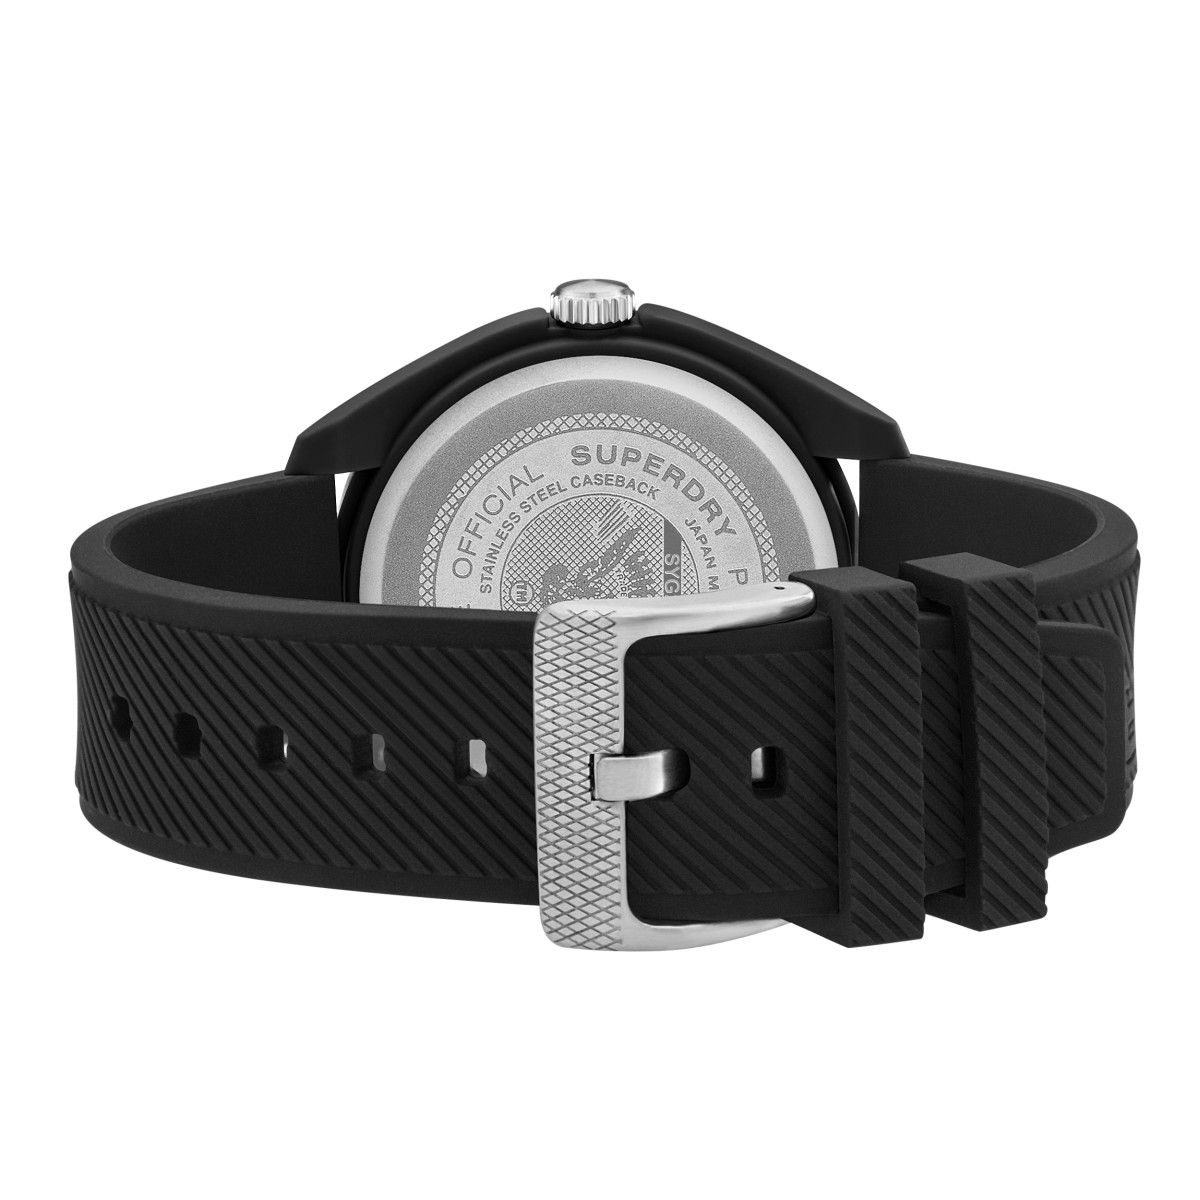 Montre homme Superdry OSAKA ORIGINAL - cadran gris - bracelet noir